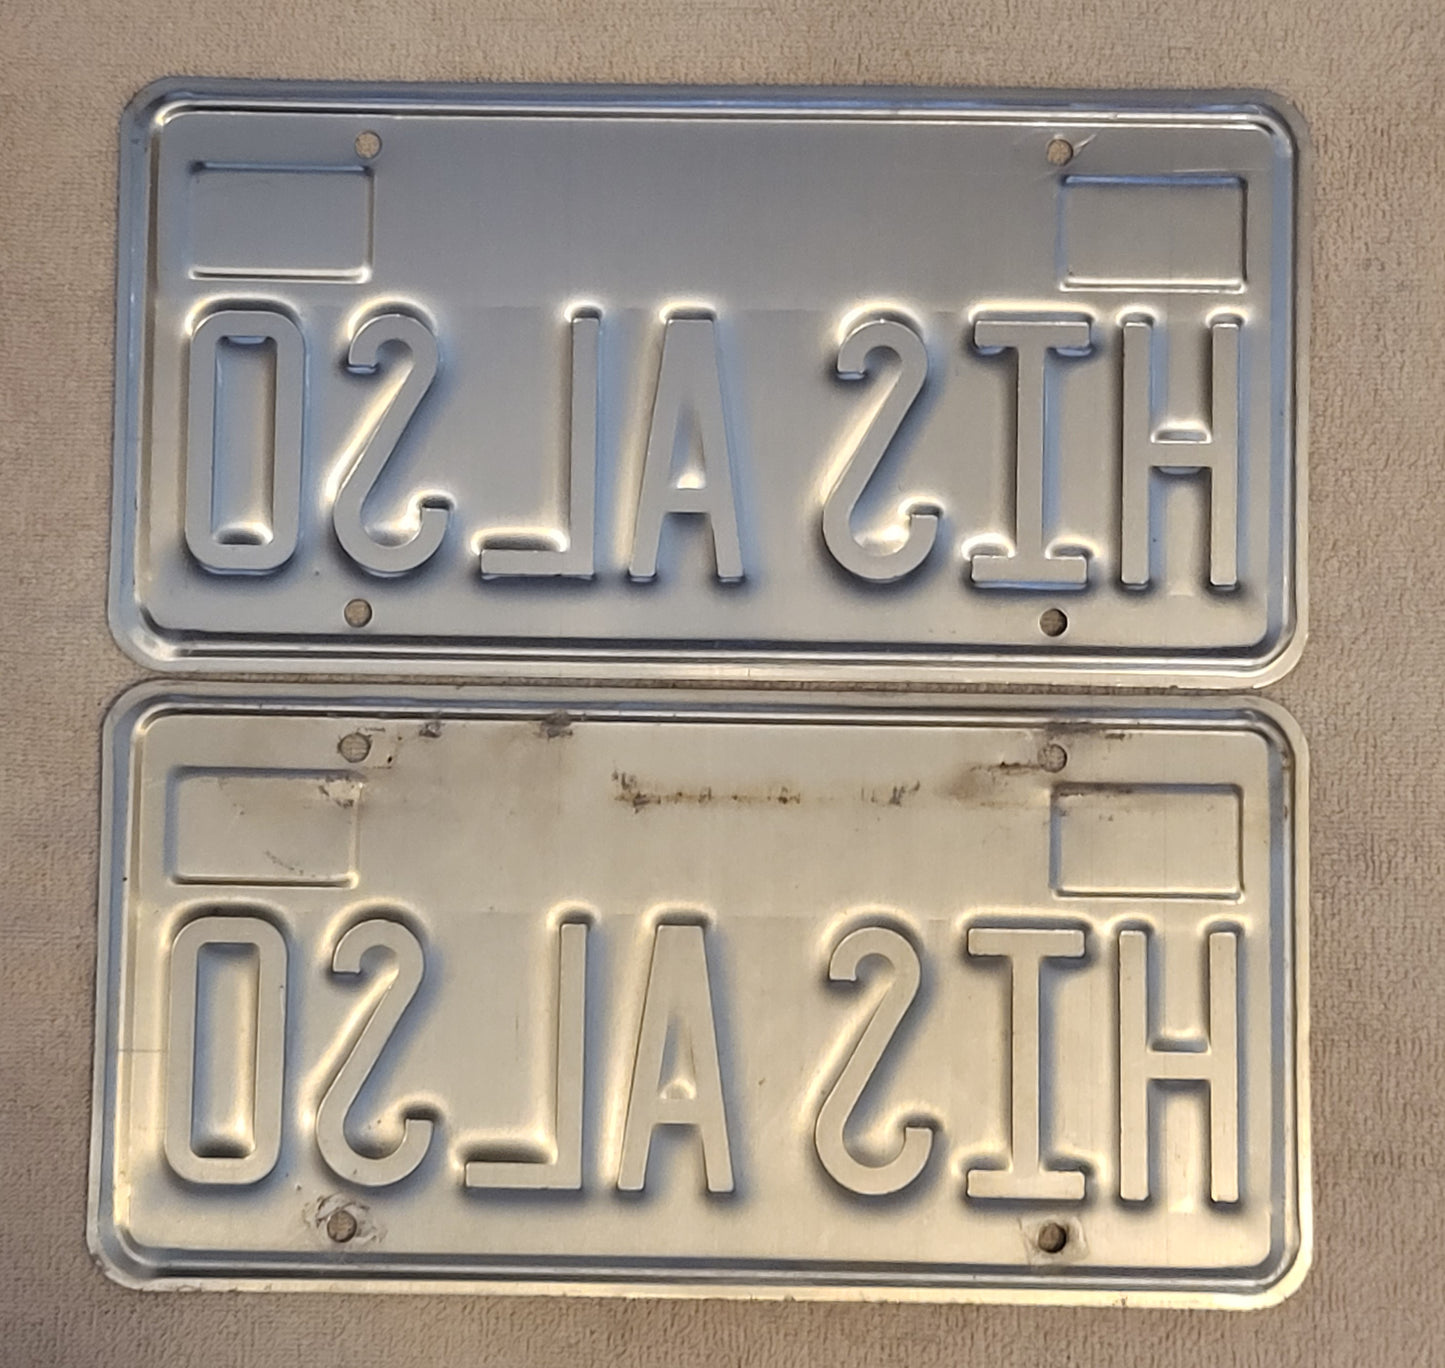 1987 California Golden State Vanity License Plates # HIS ALSO Pair Original